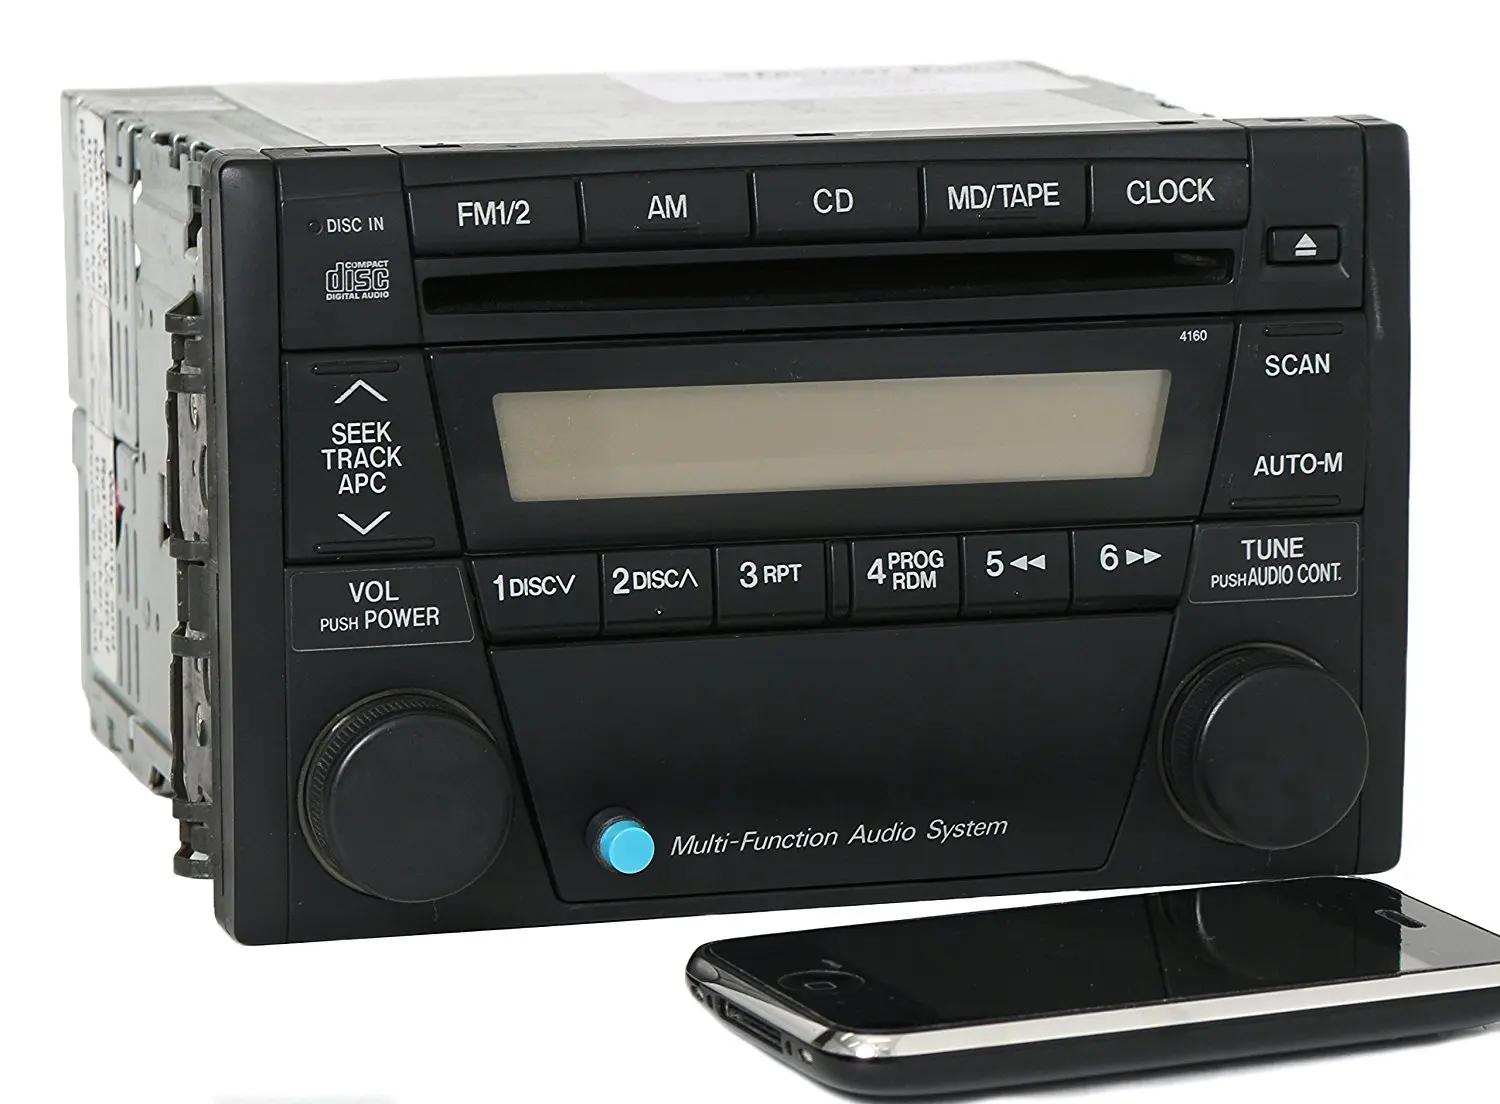 Cheap Mazda 626 Radio, find Mazda 626 Radio deals on line at Alibaba.com